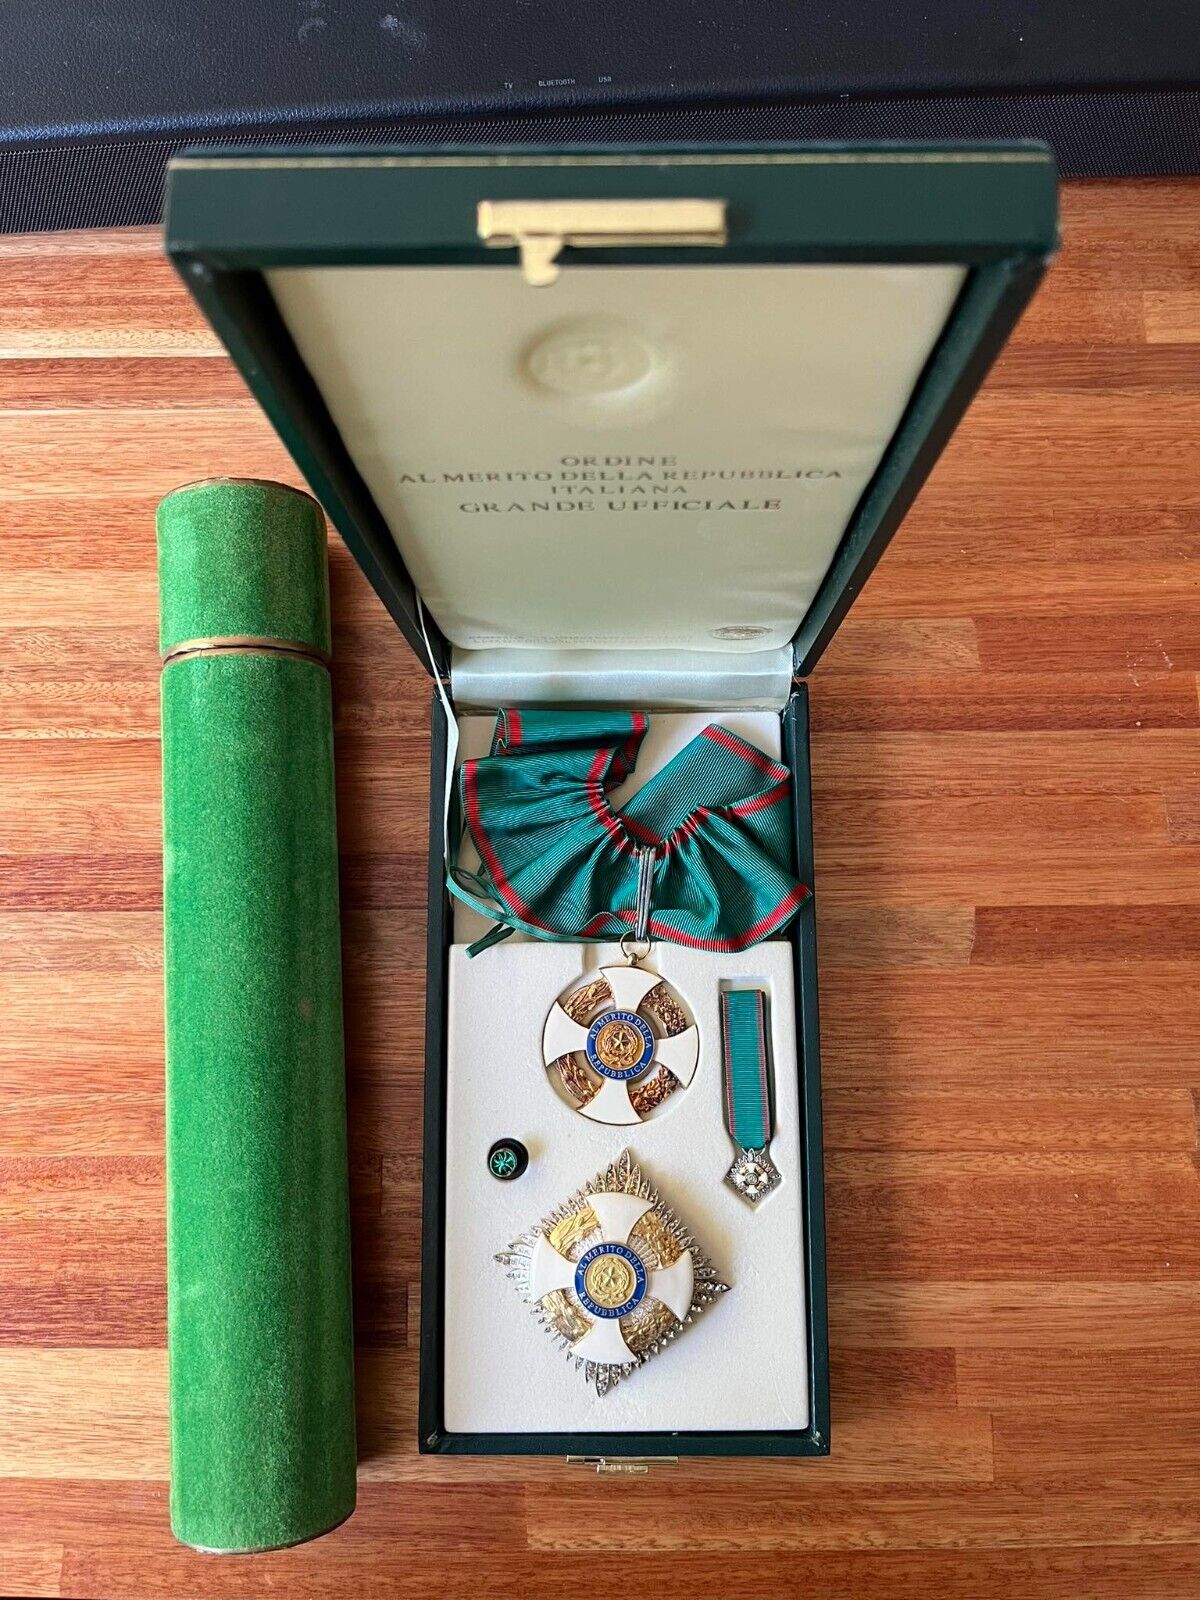 Original Italy Republic Order of Merit GRAND OFFICER w/ diploma